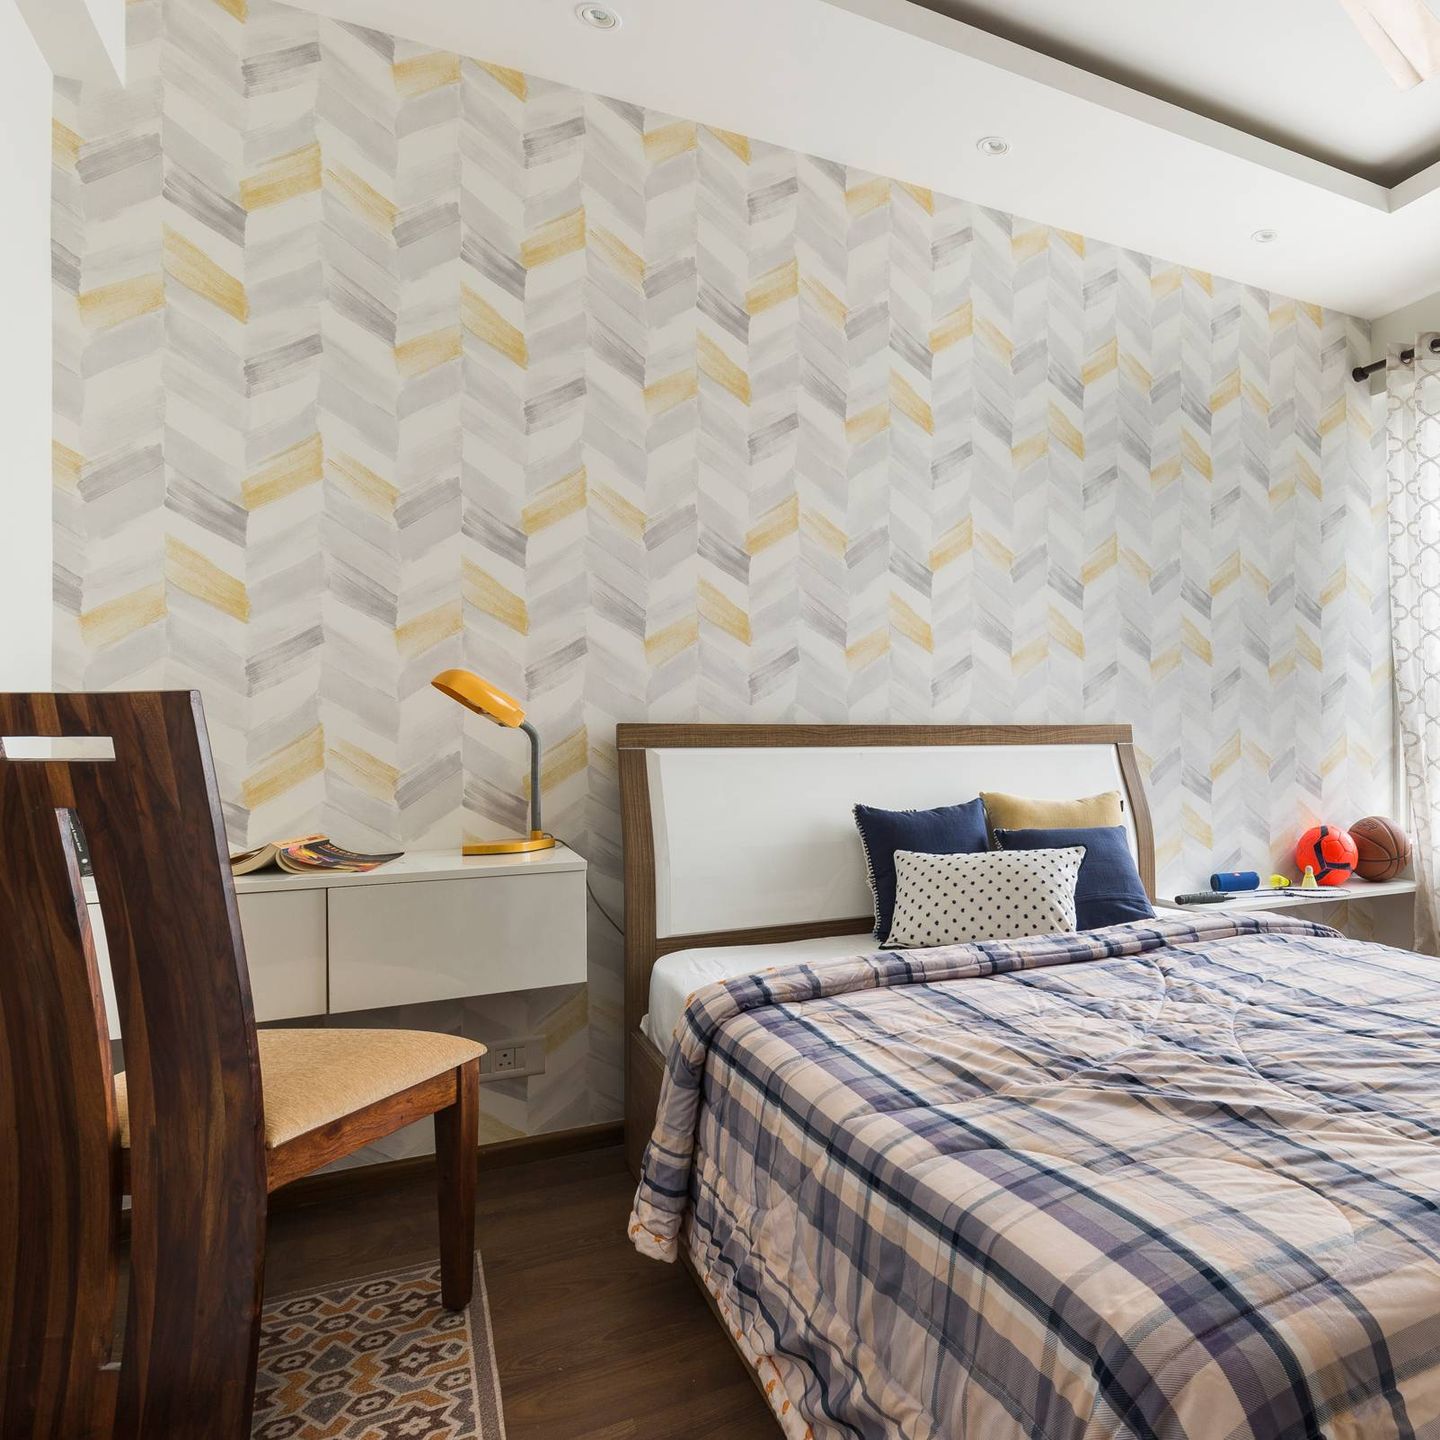 Tricolour Herringbone-Patterned Wallpaper Design For Bedrooms - Livspace